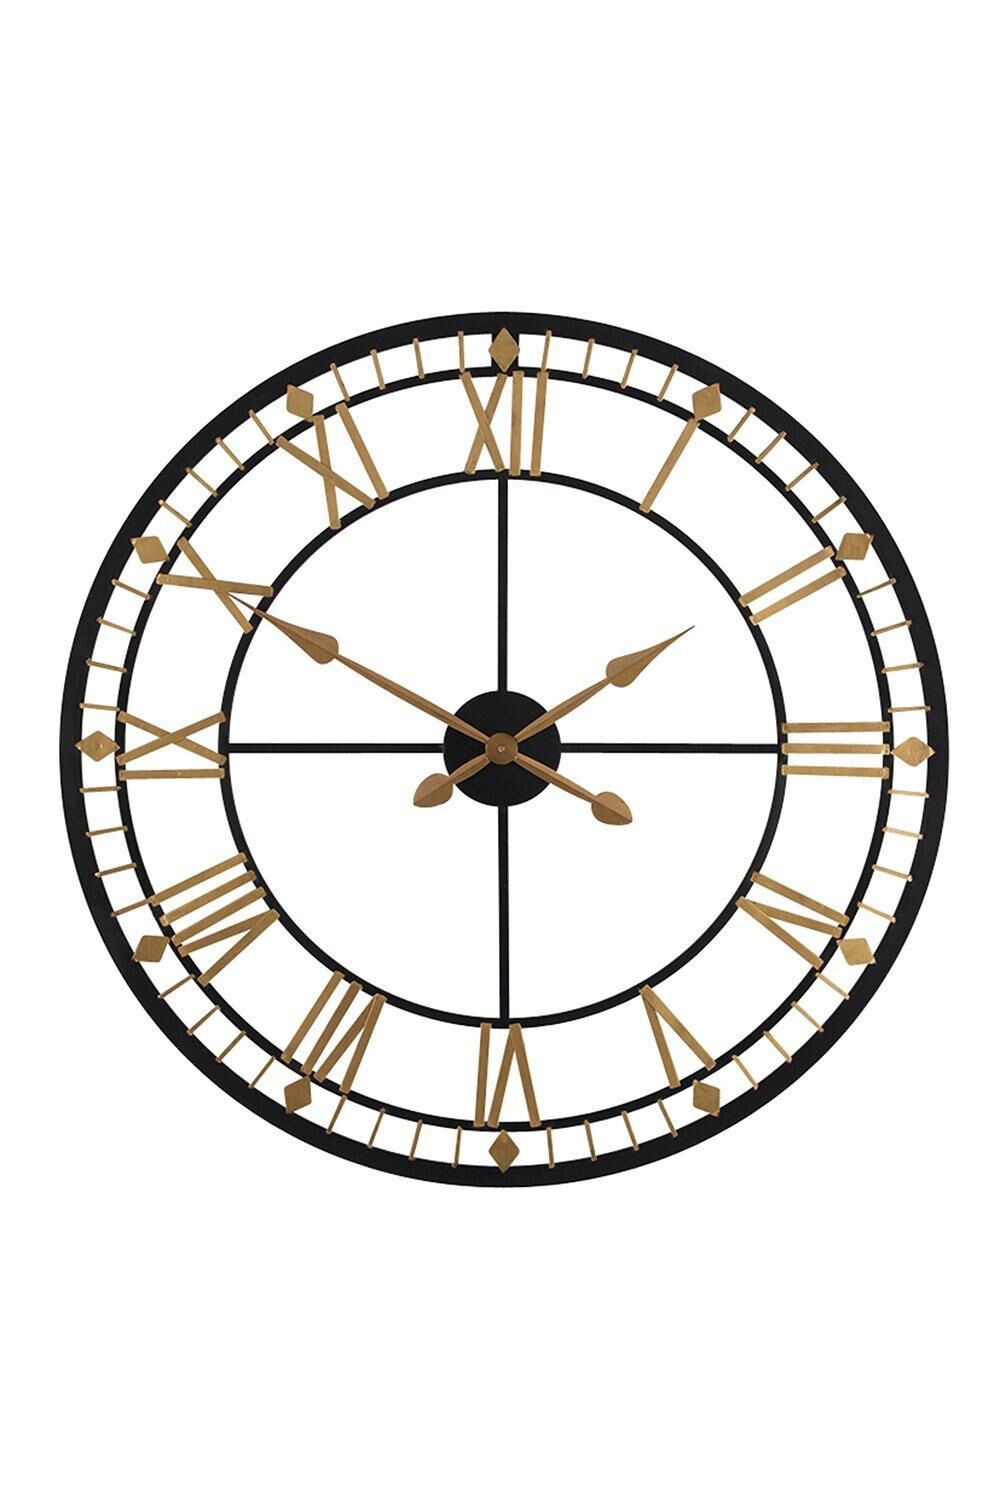 Ruma Skeleton Moderately Distressed Round Wall Clock